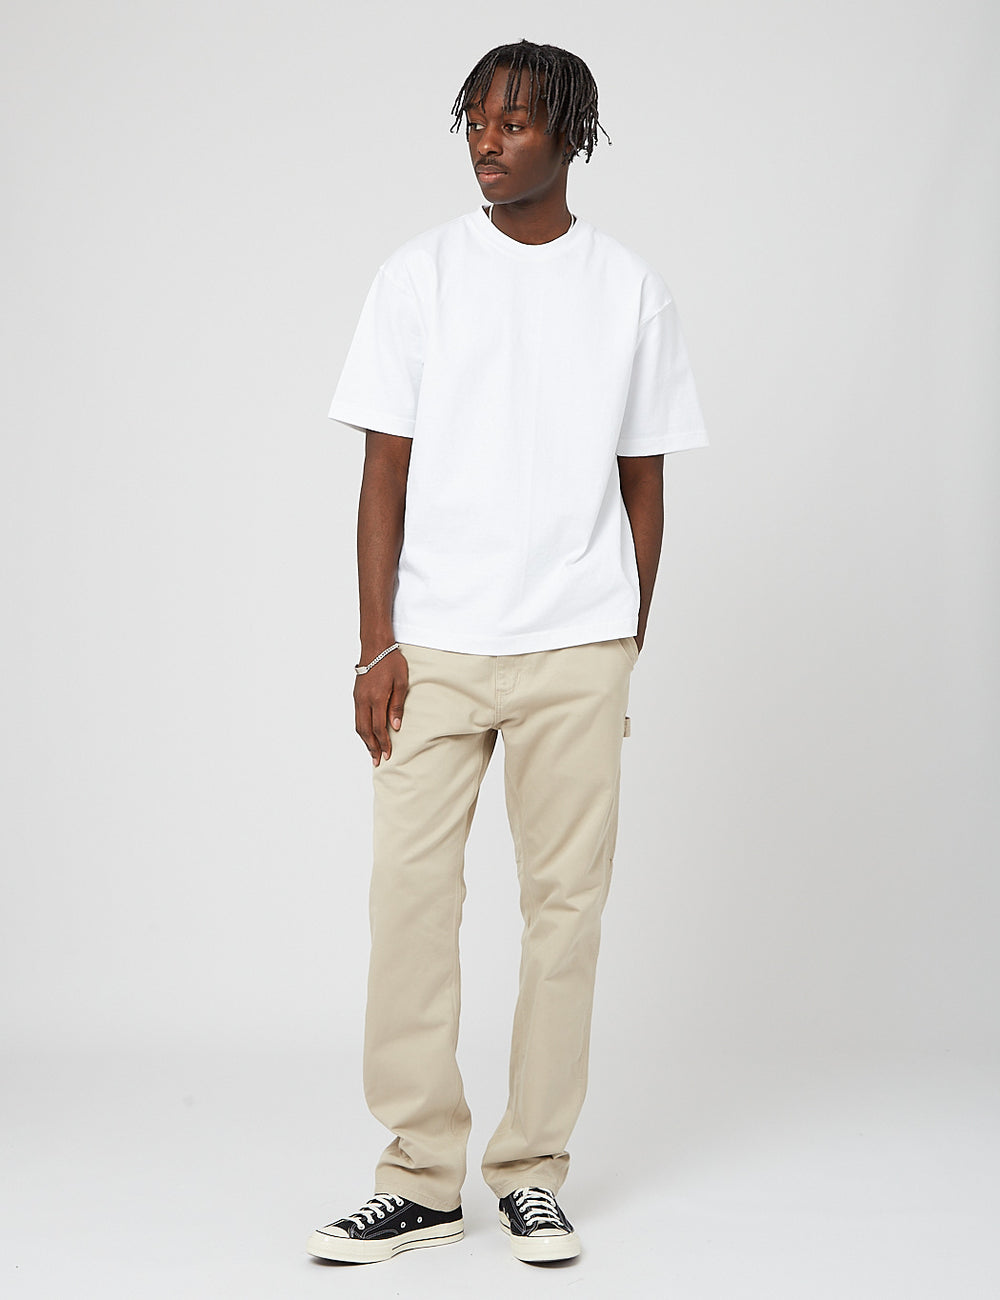 Camber USA 301 T-shirt (8oz Cotton) - White I URBAN